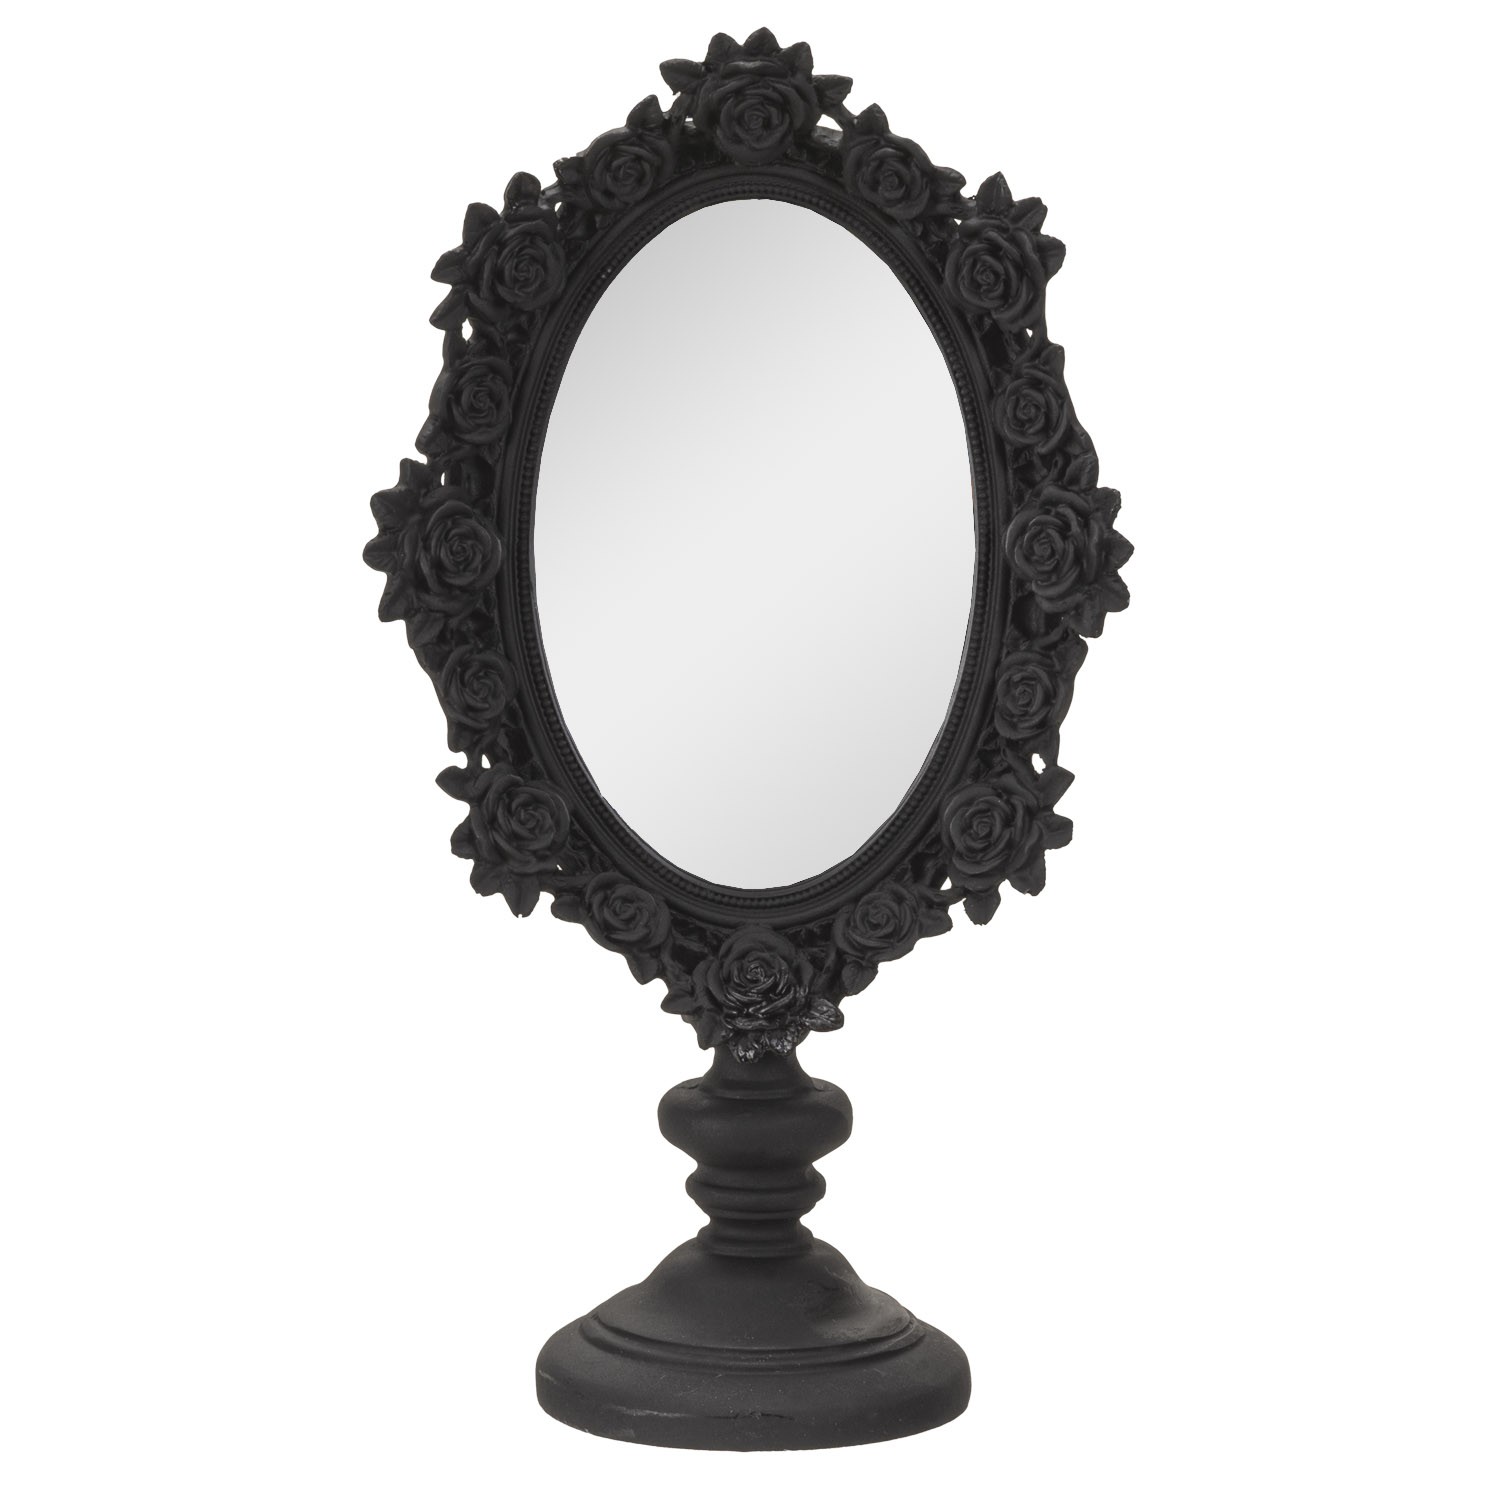 11" Black Rose Standing Mirror